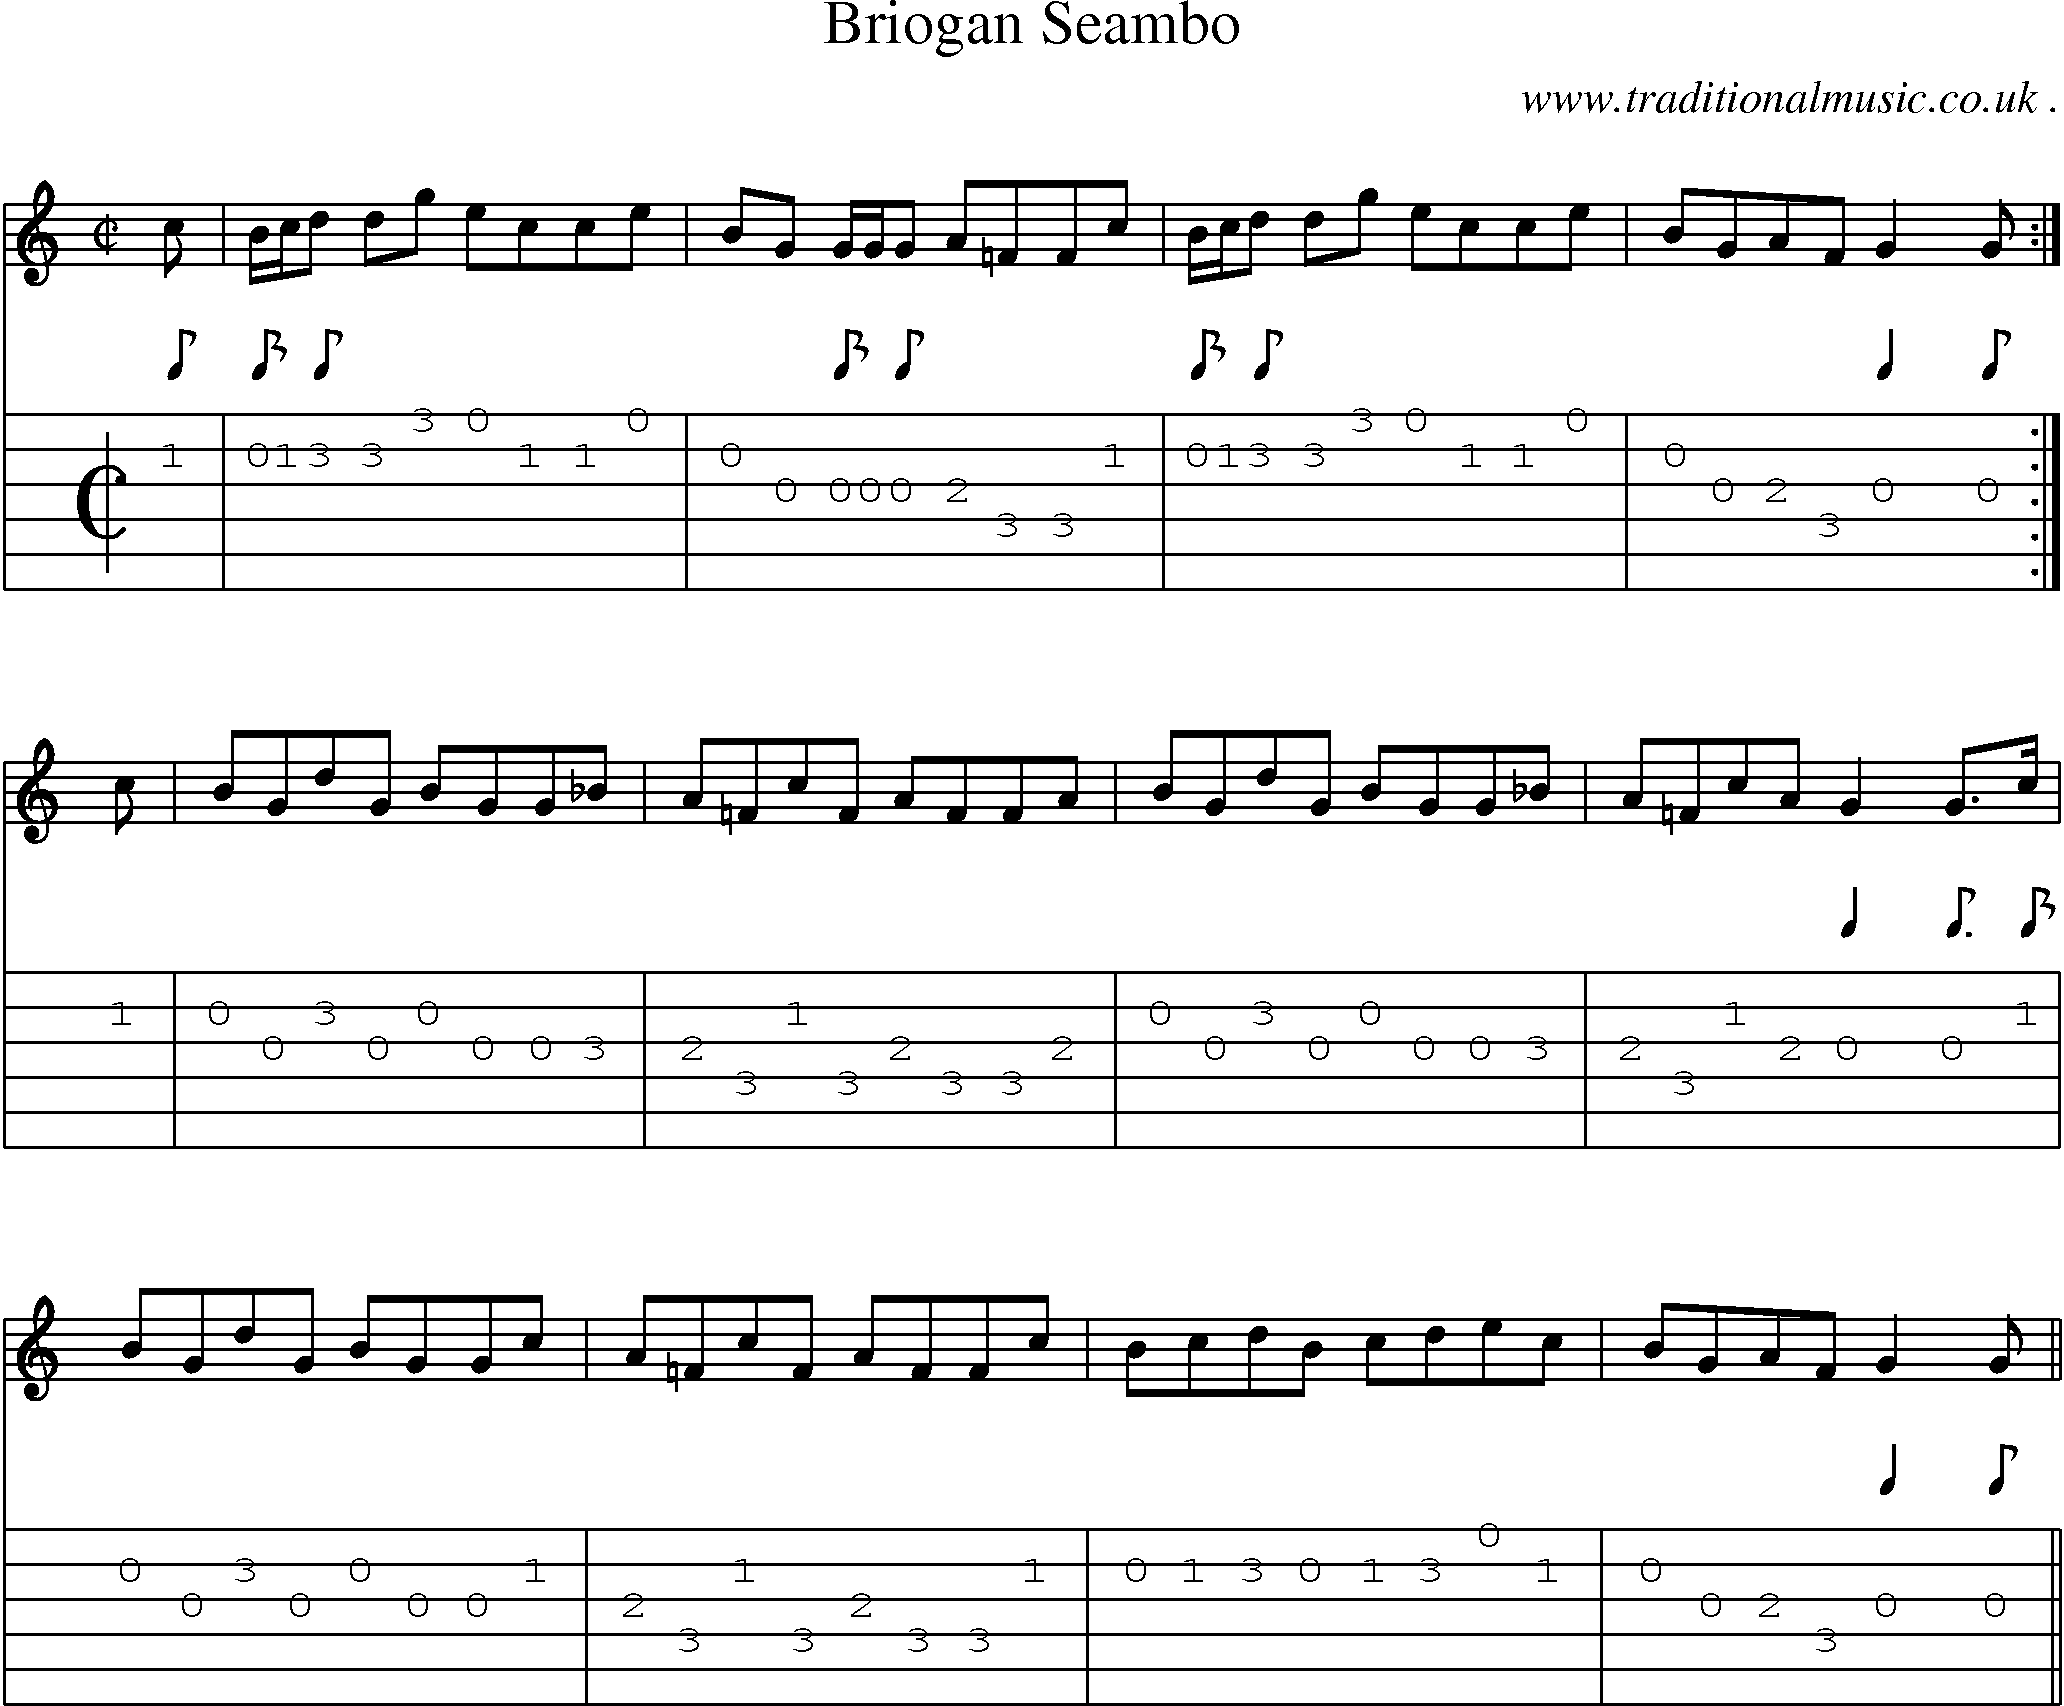 Sheet-music  score, Chords and Guitar Tabs for Briogan Seambo